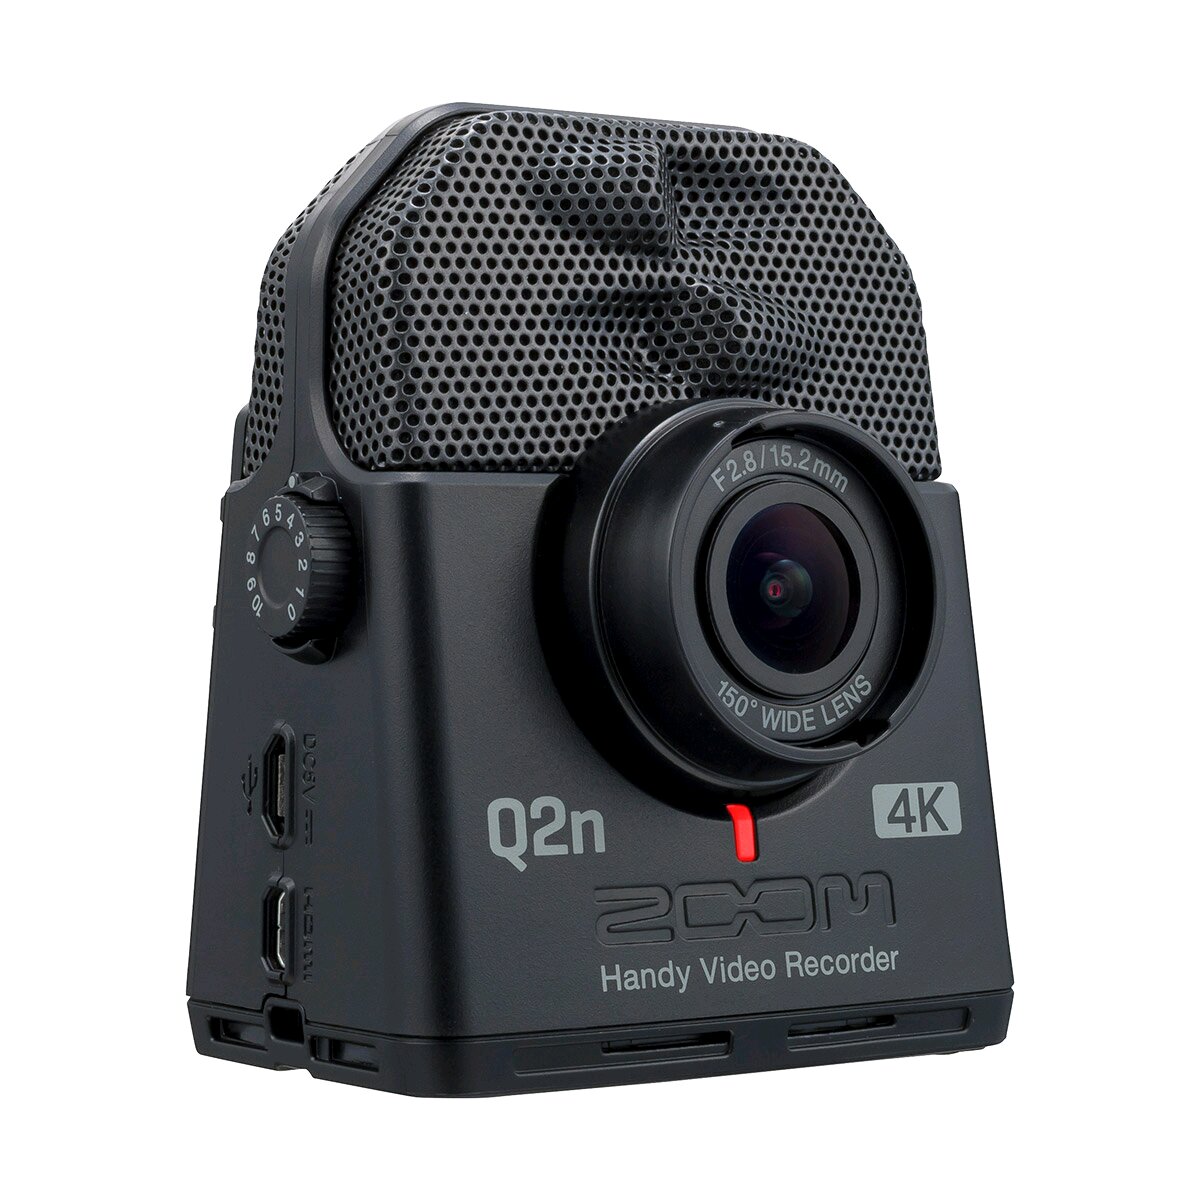 Zoom Q2n 4K Handy Video Recorder : photo 1